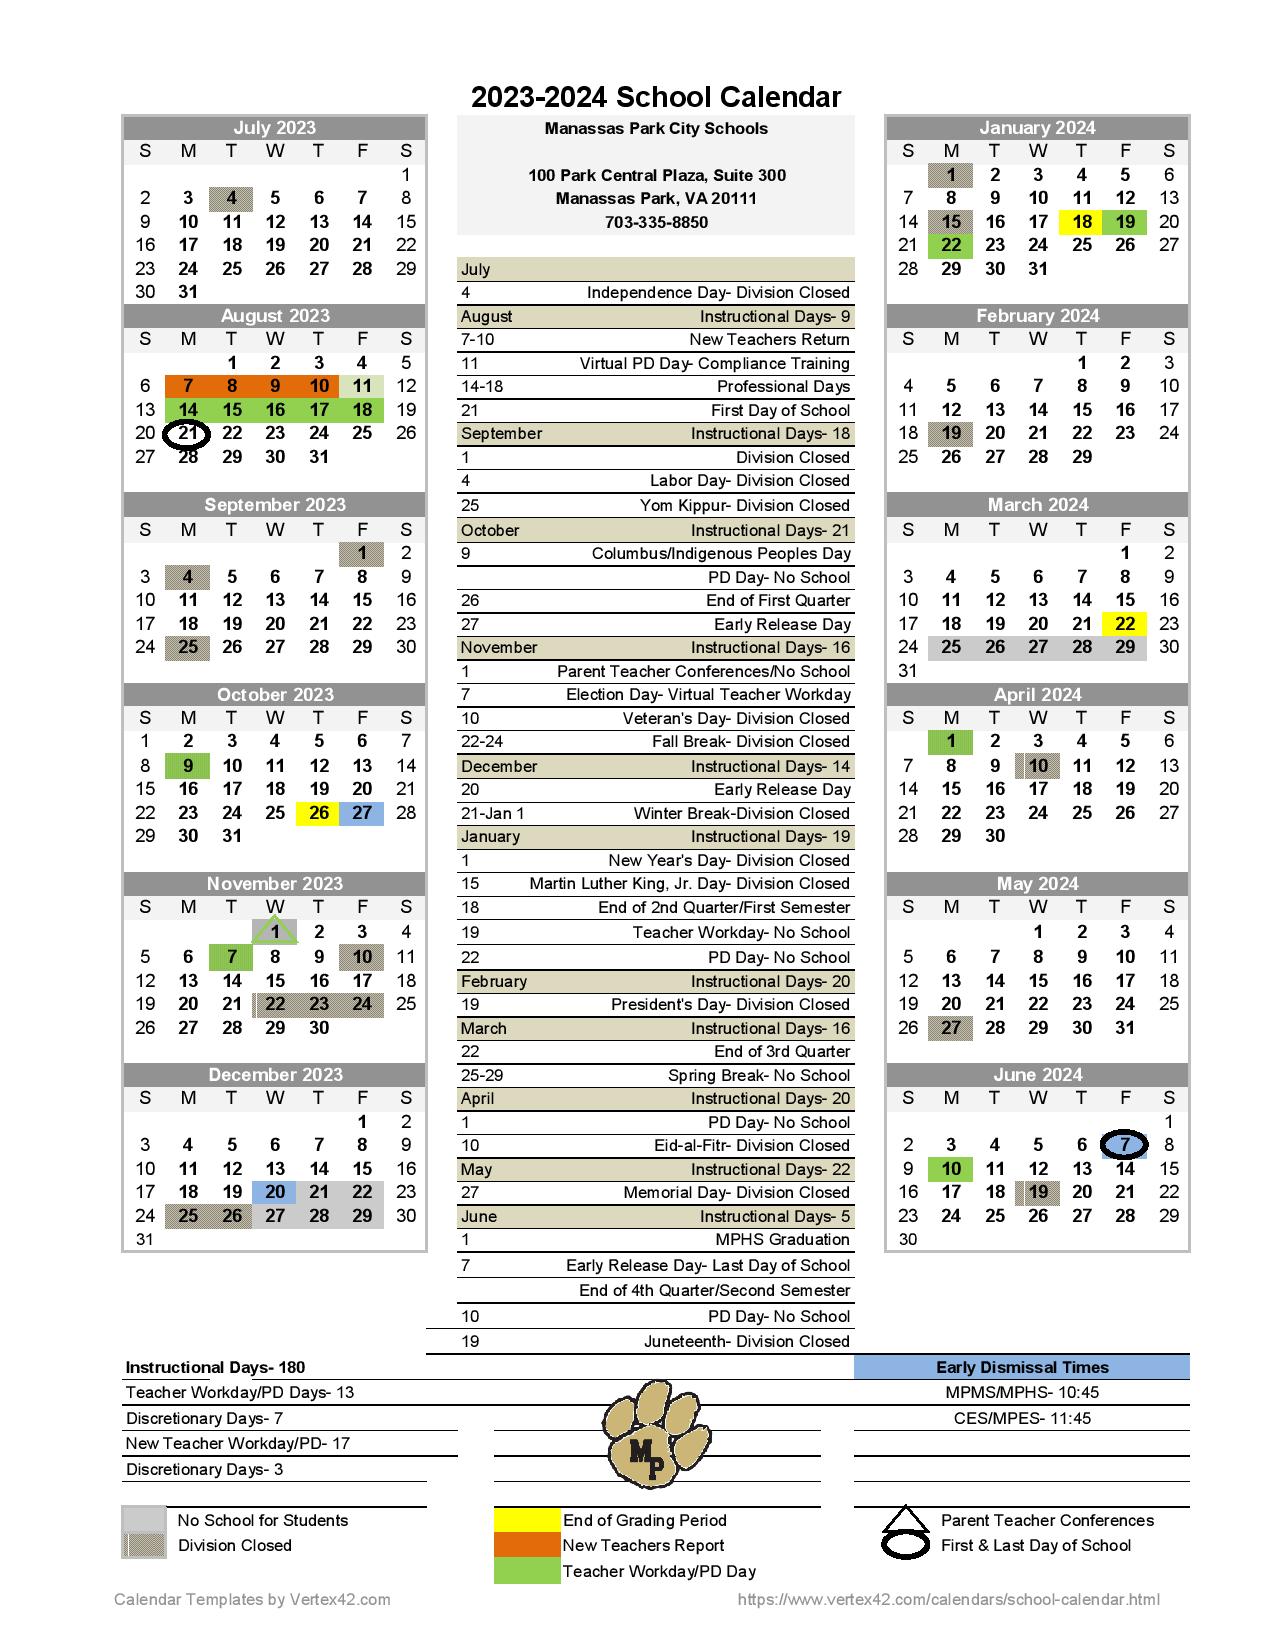 Manassas Park City Schools Calendar 2023 2024 in PDF